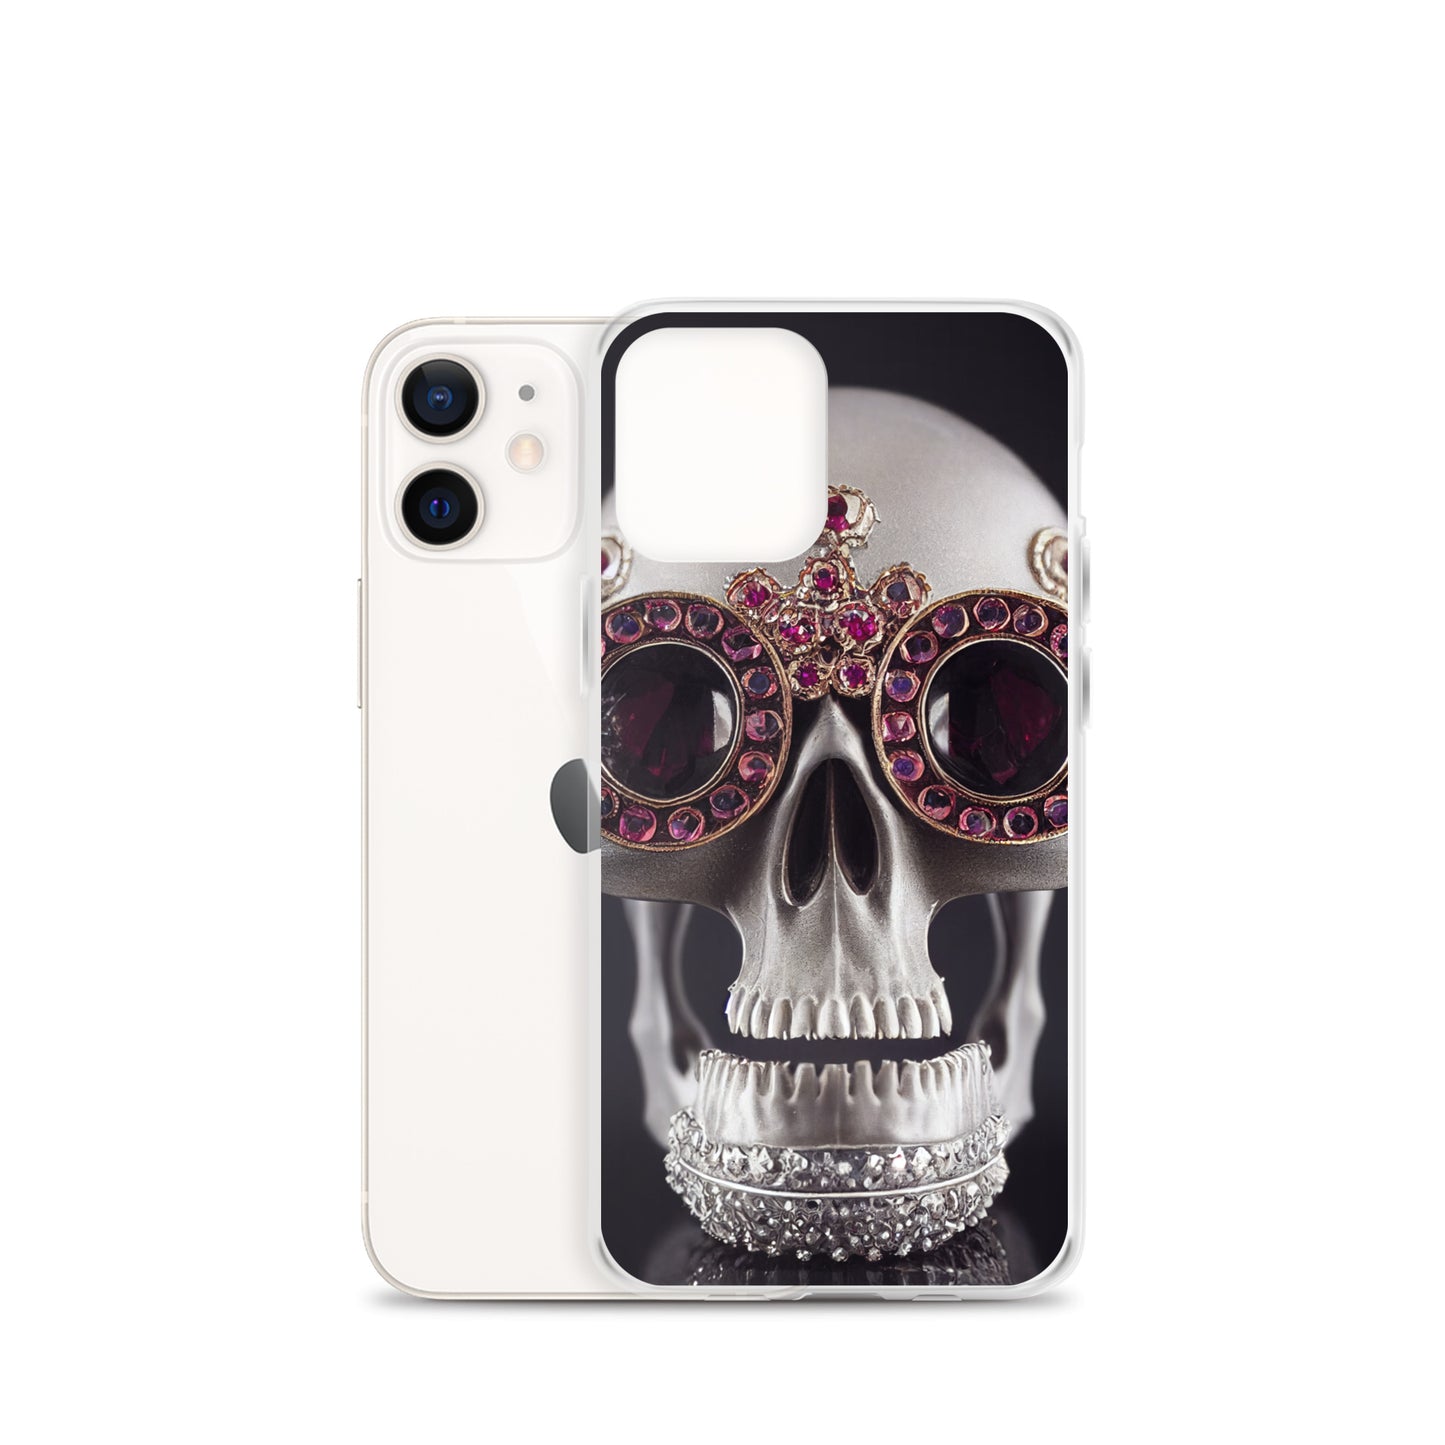 iPhone Case - Ornate Ruby Eyed Skull